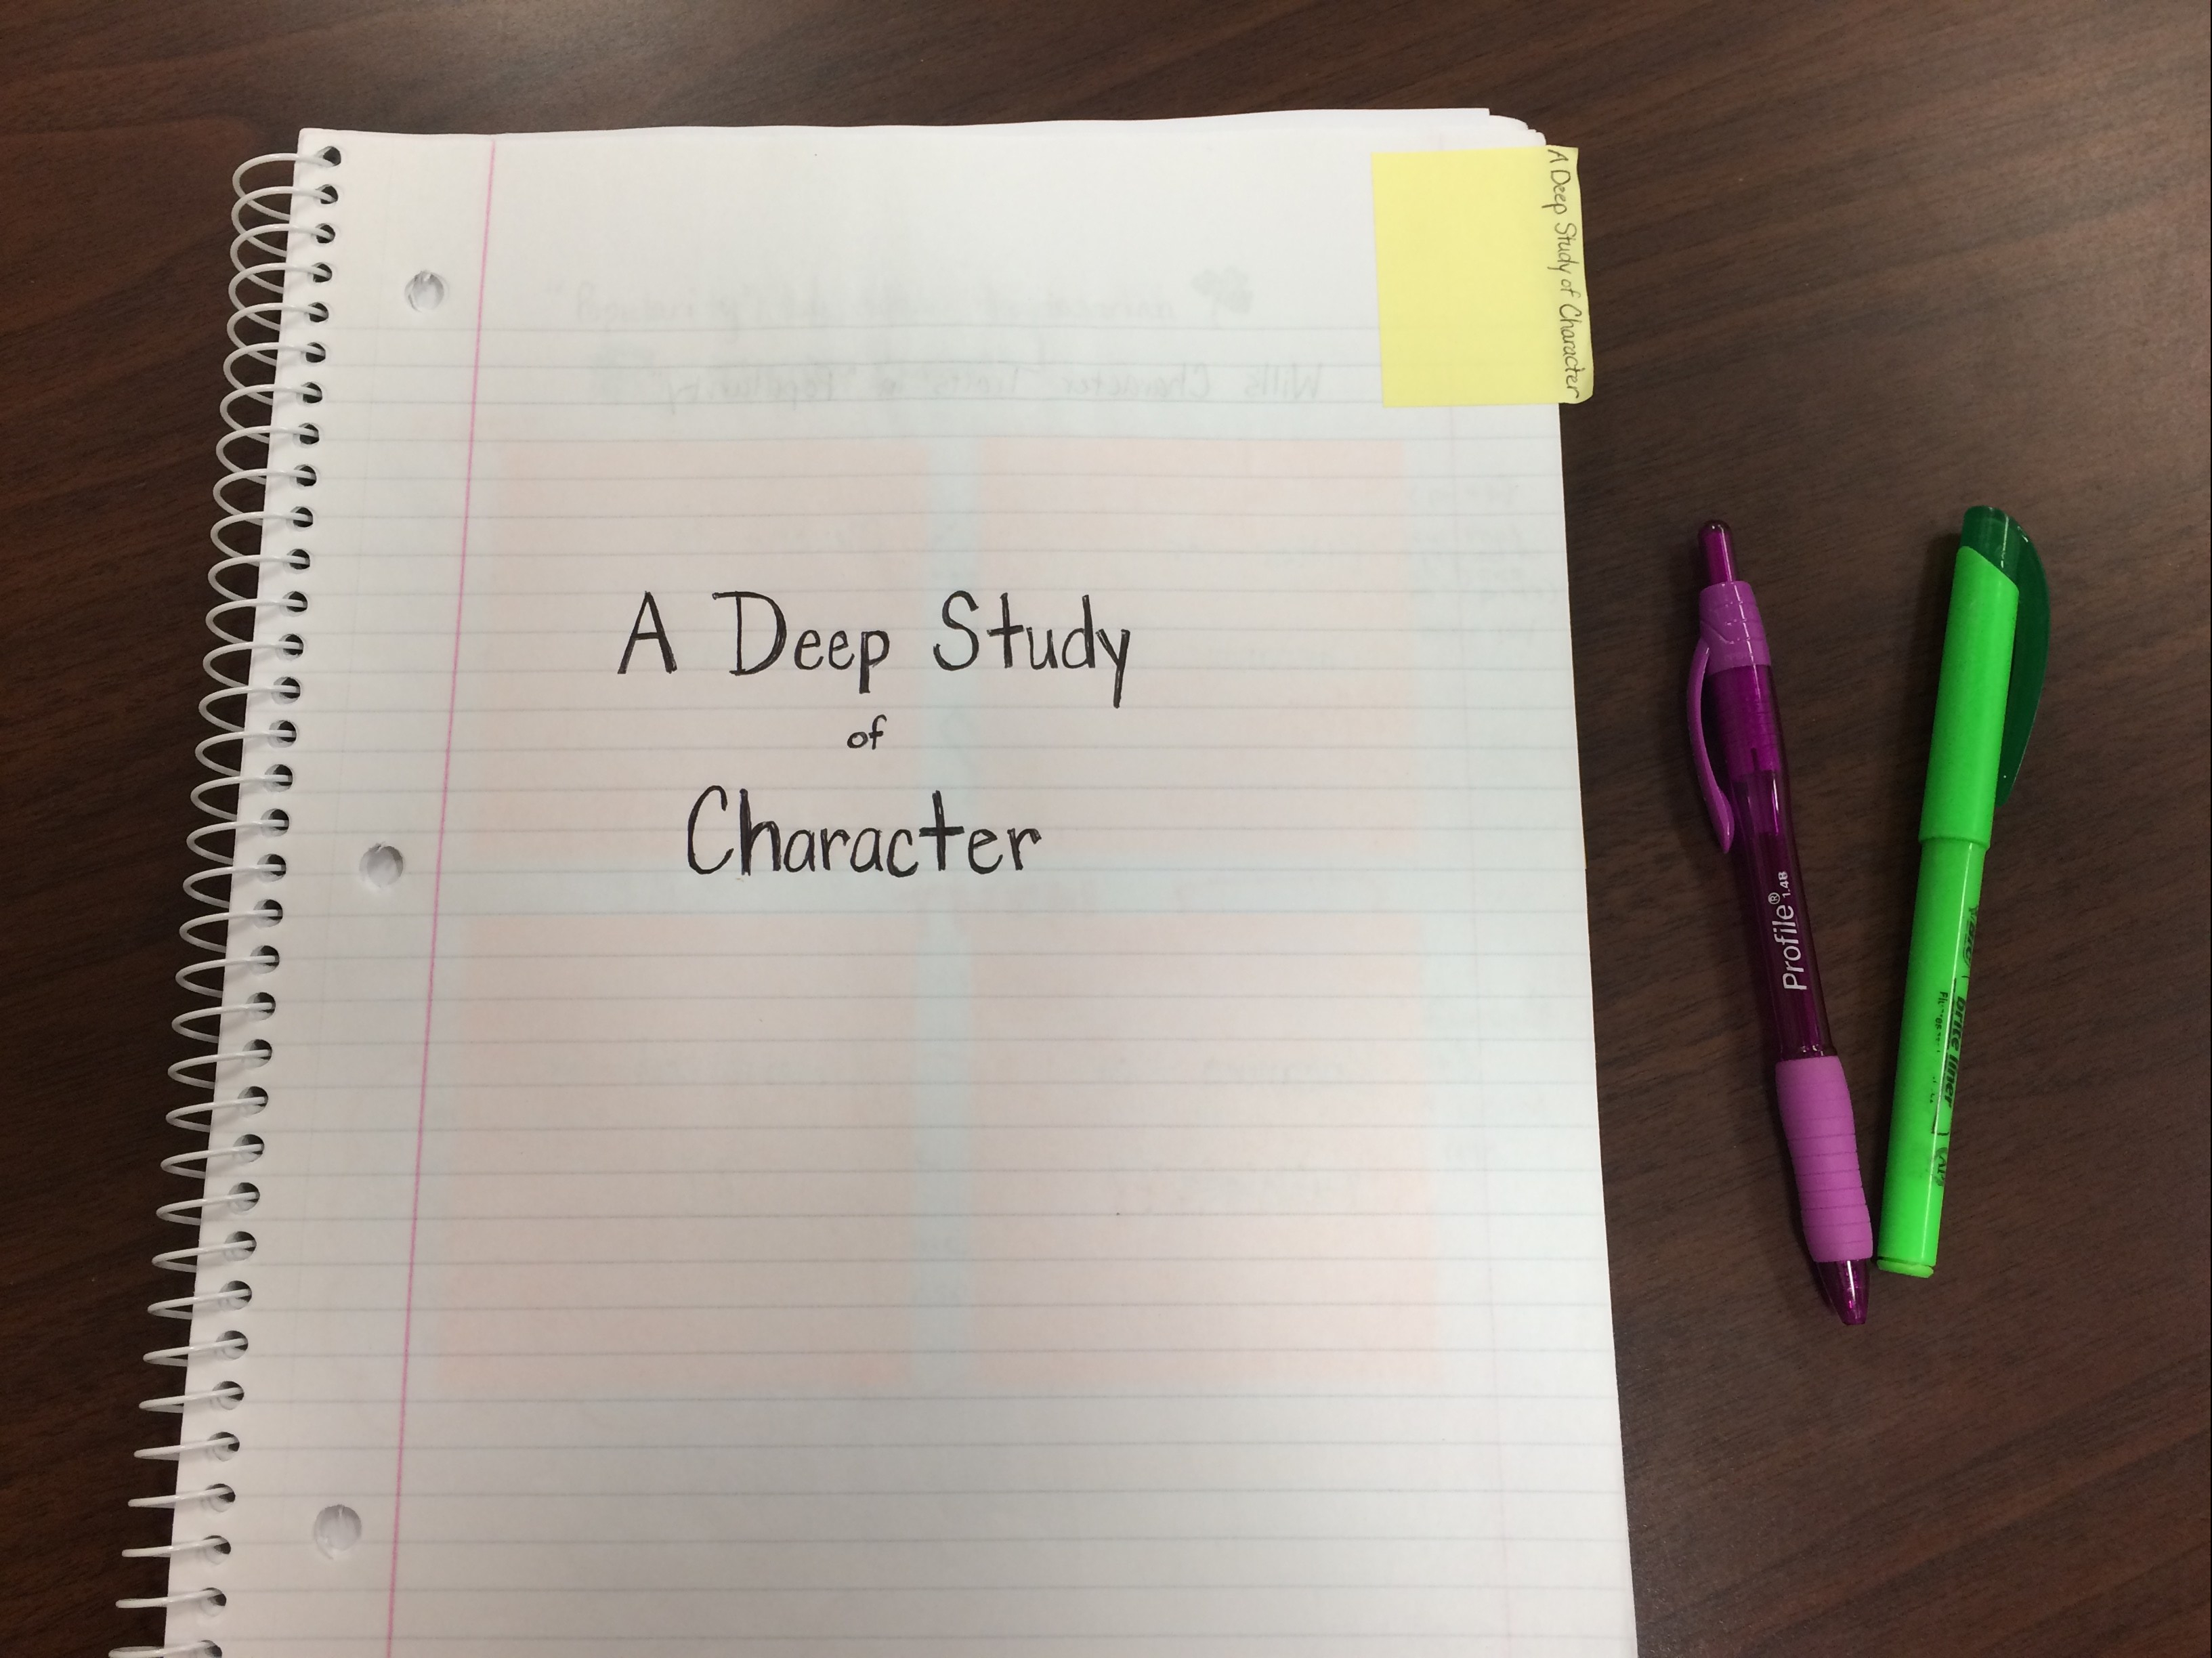 Deep Study Notebook Cover